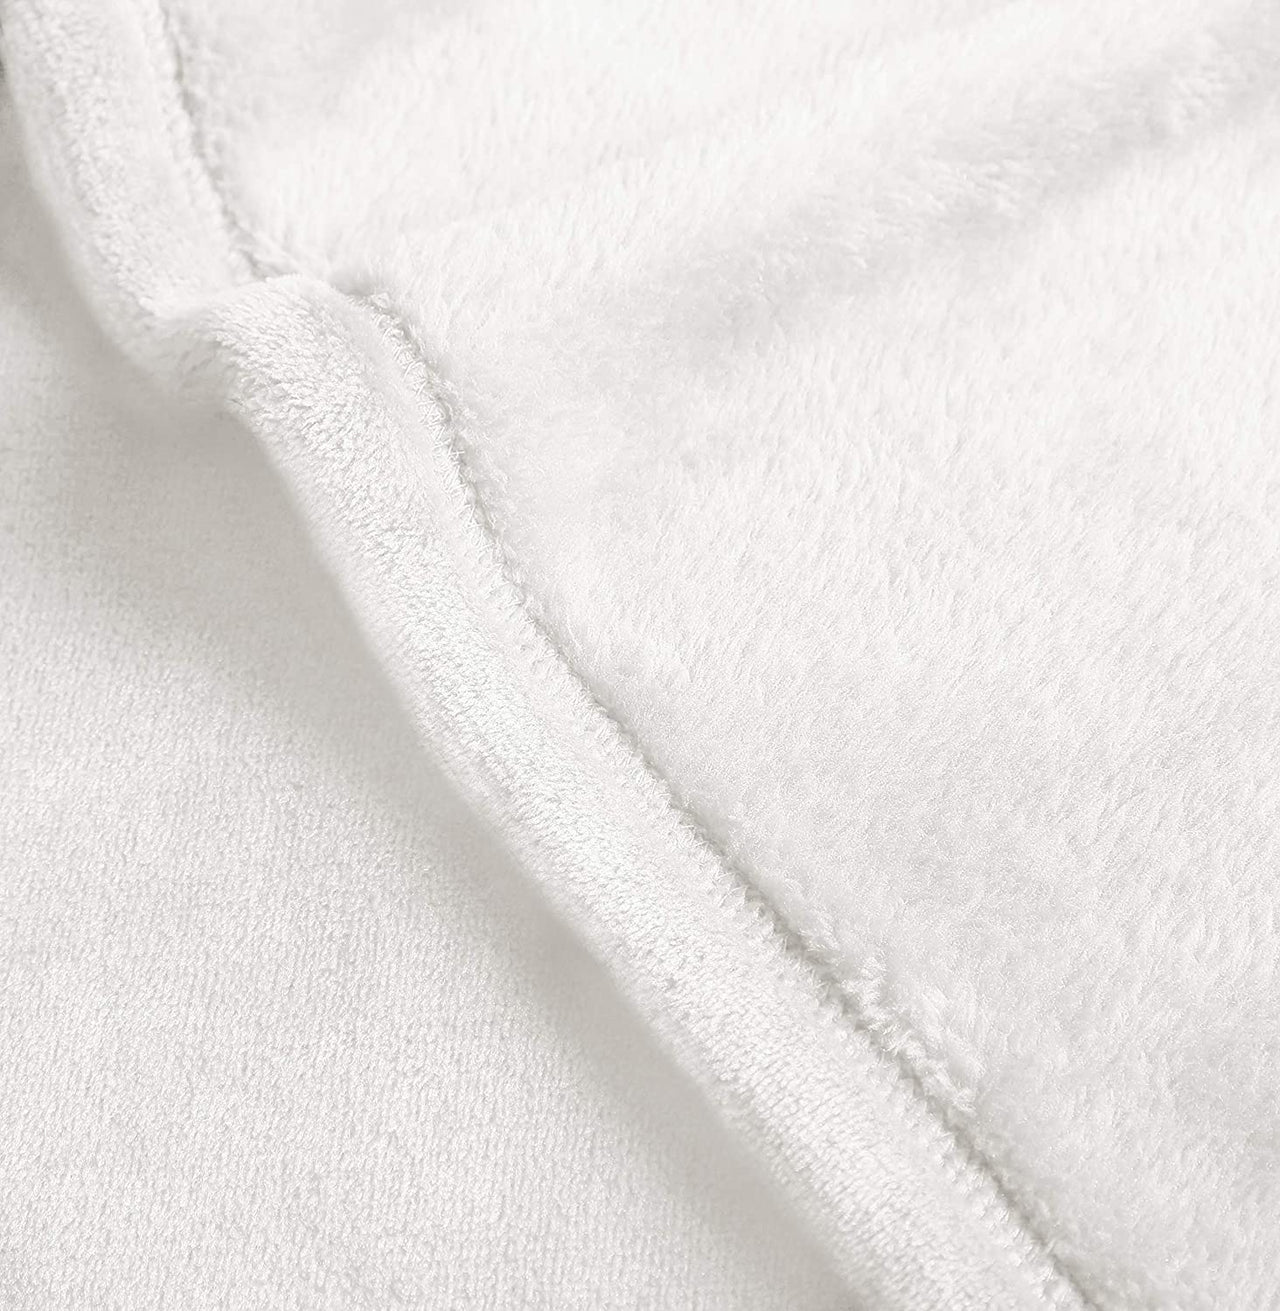 Personalized Dog Blanket Gift Idea - Poodle Fucupcakes For Dog Lover - Fleece Blanket